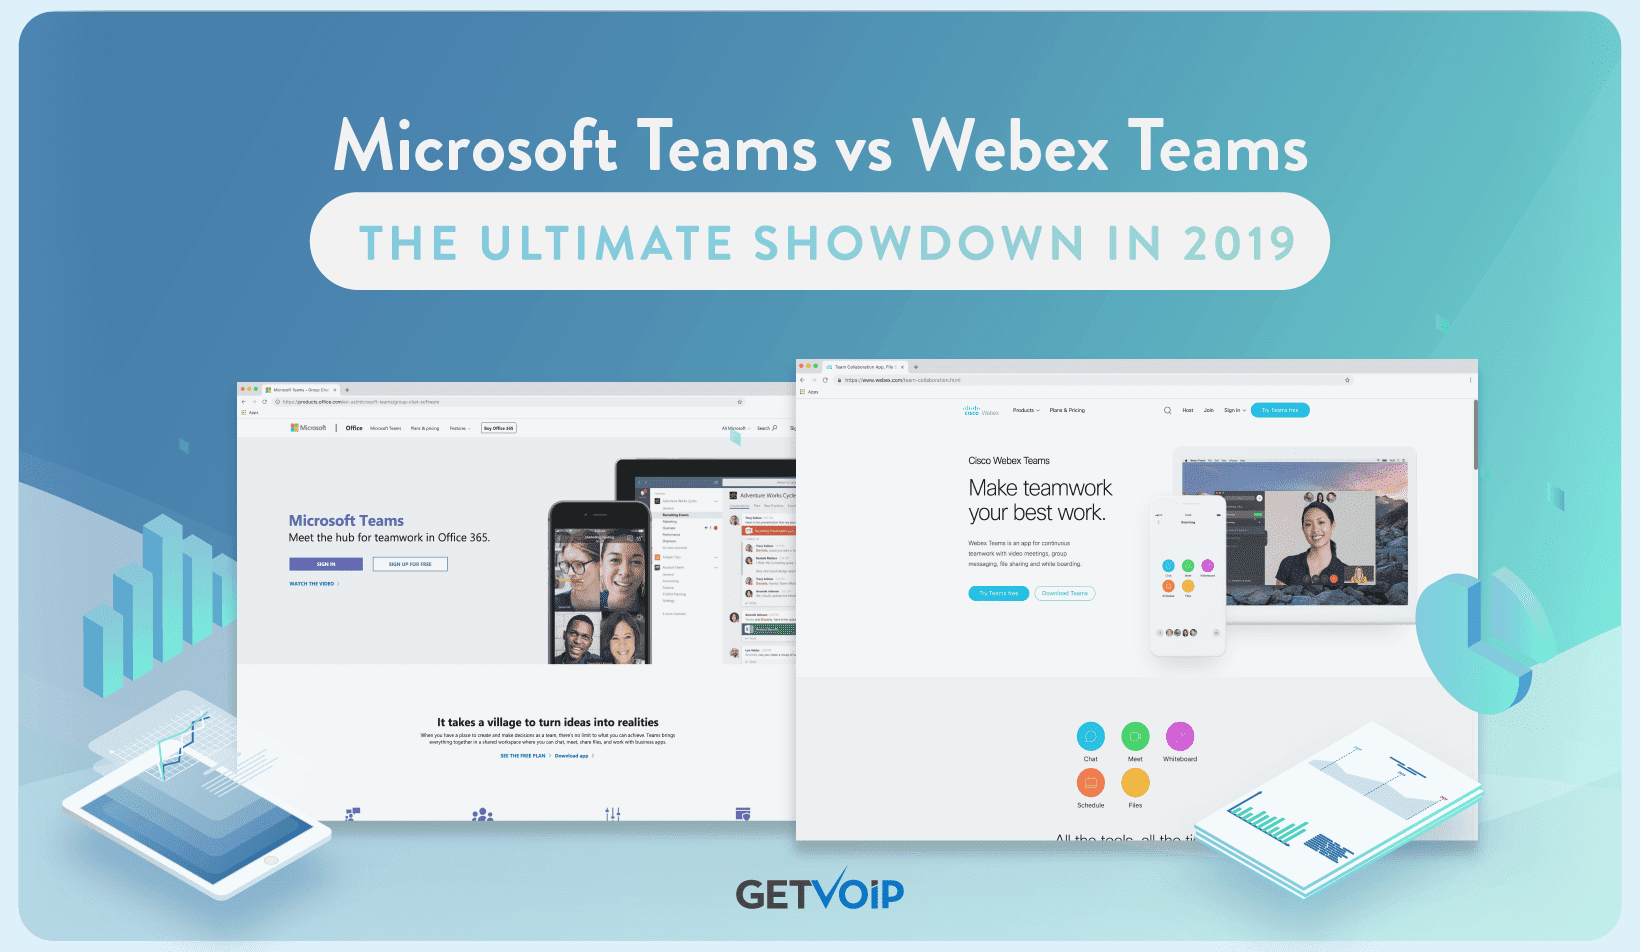 Microsoft Teams vs Webex Teams: The Ultimate Showdown in 2019